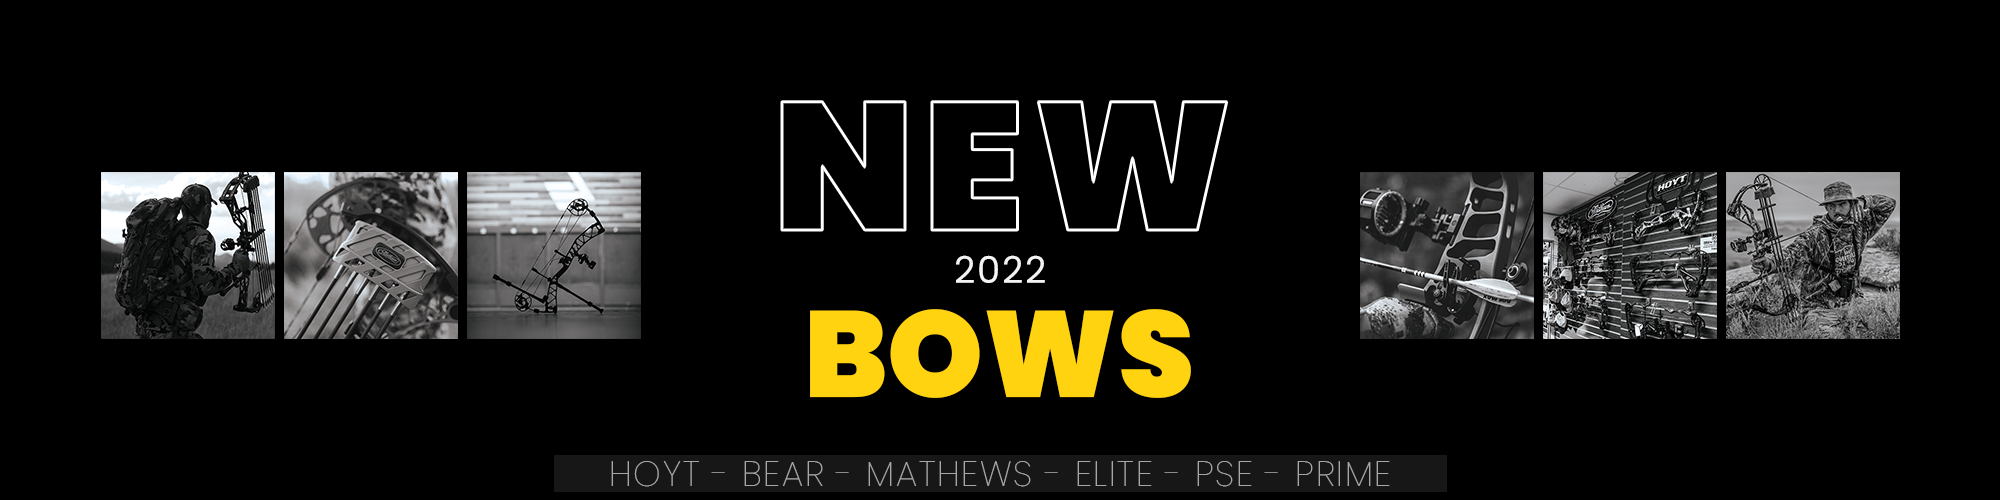 New 2022 bows